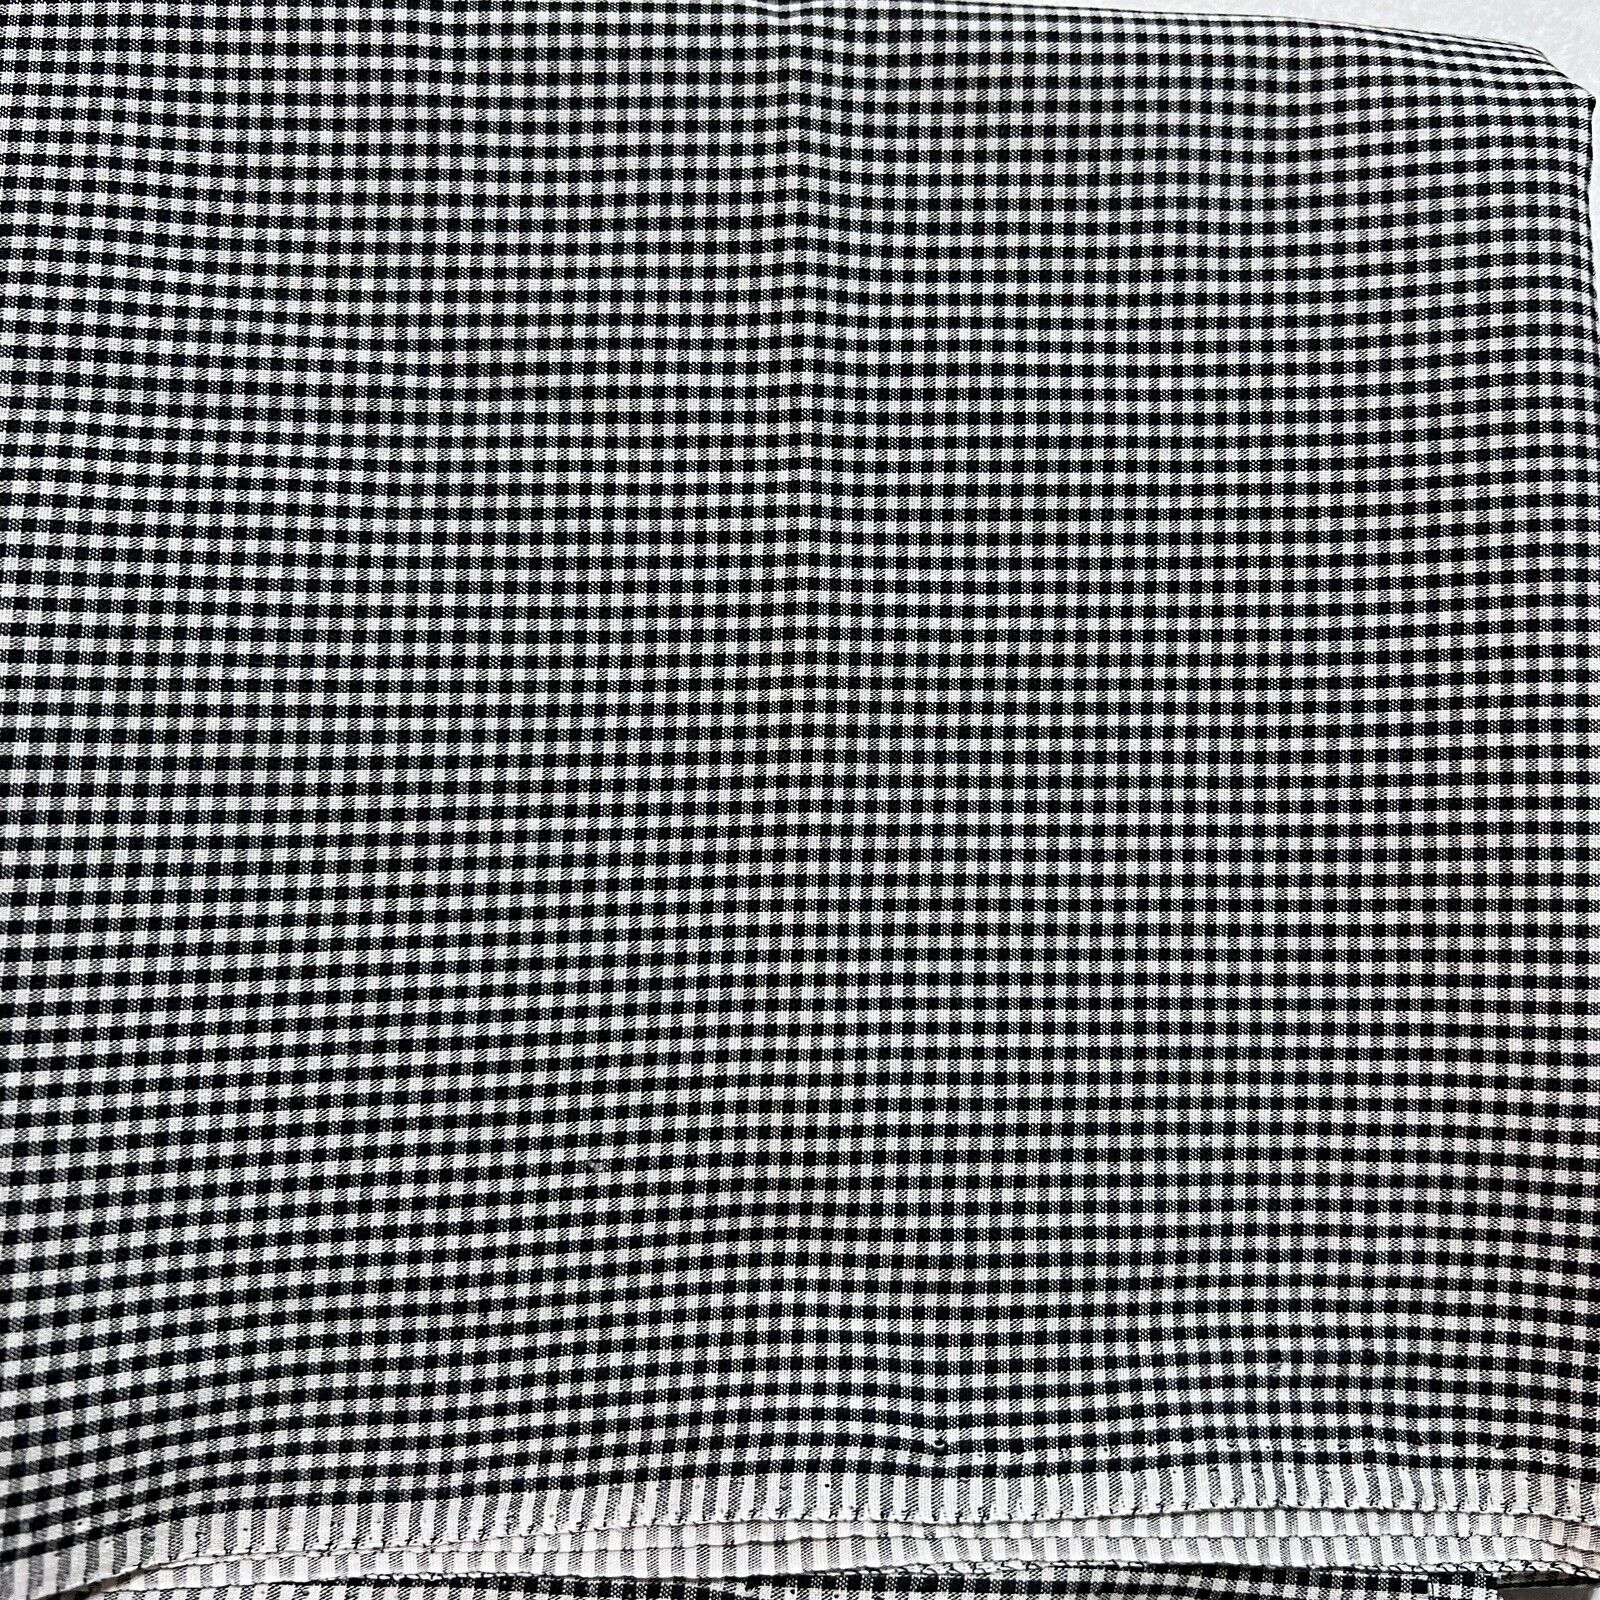 Vintage Cotton Fabric Black & Tan Gingham Check Tiny Block .75 yard X 44 Inches